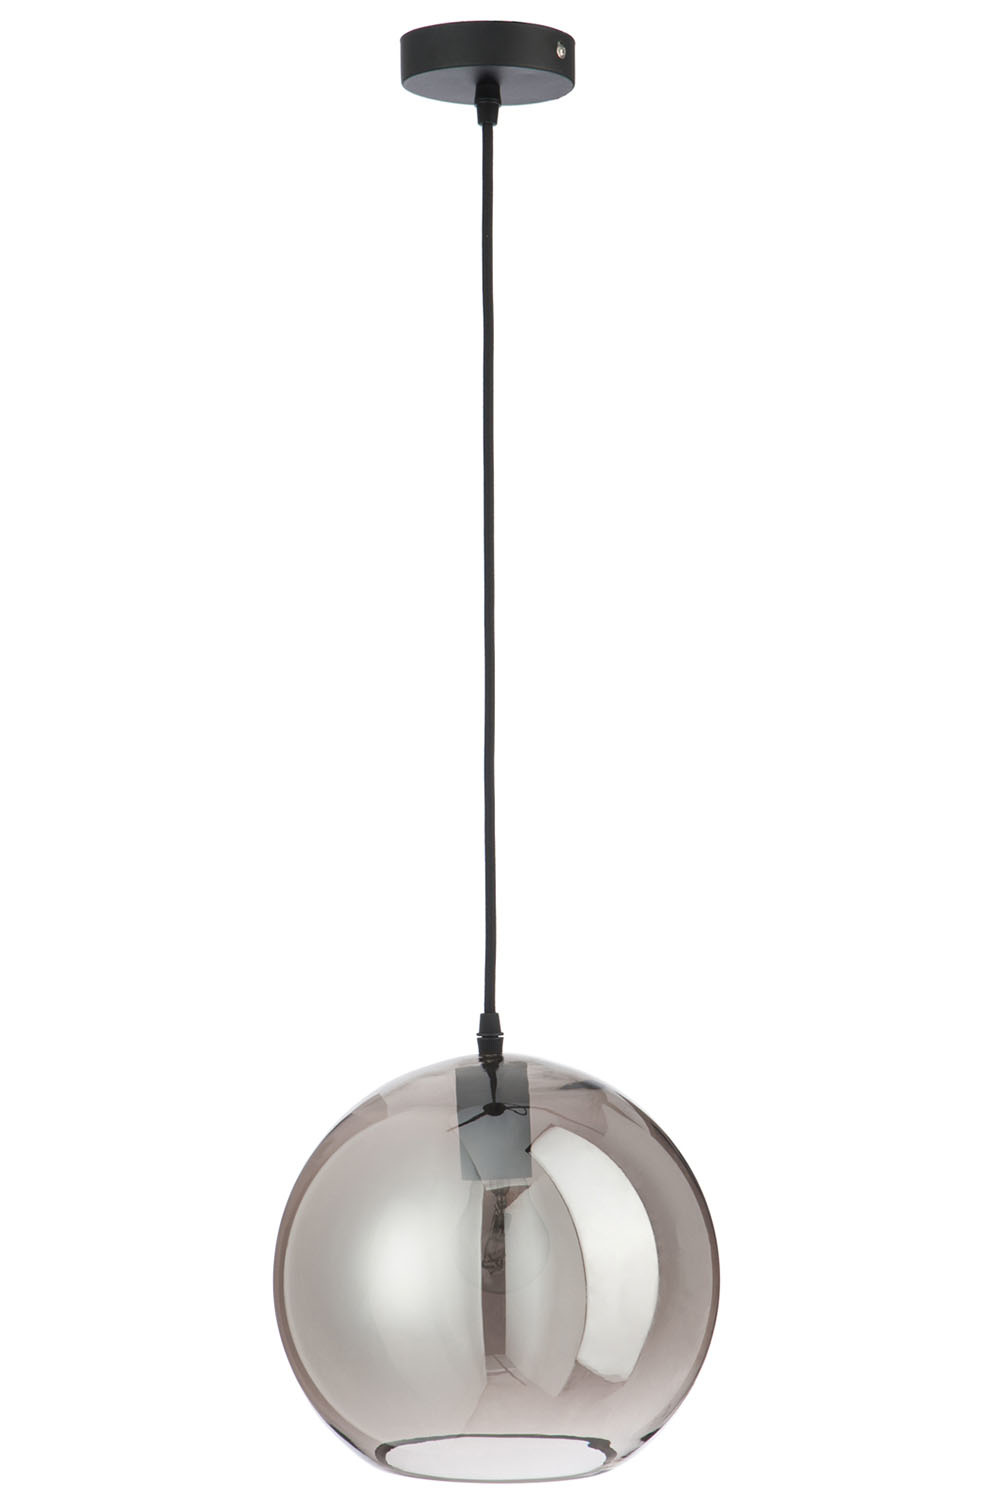 Hesje Rationeel roddel Hanglamp Glas Bol Modern Zilver - Medium - Sl-homedecoration.com